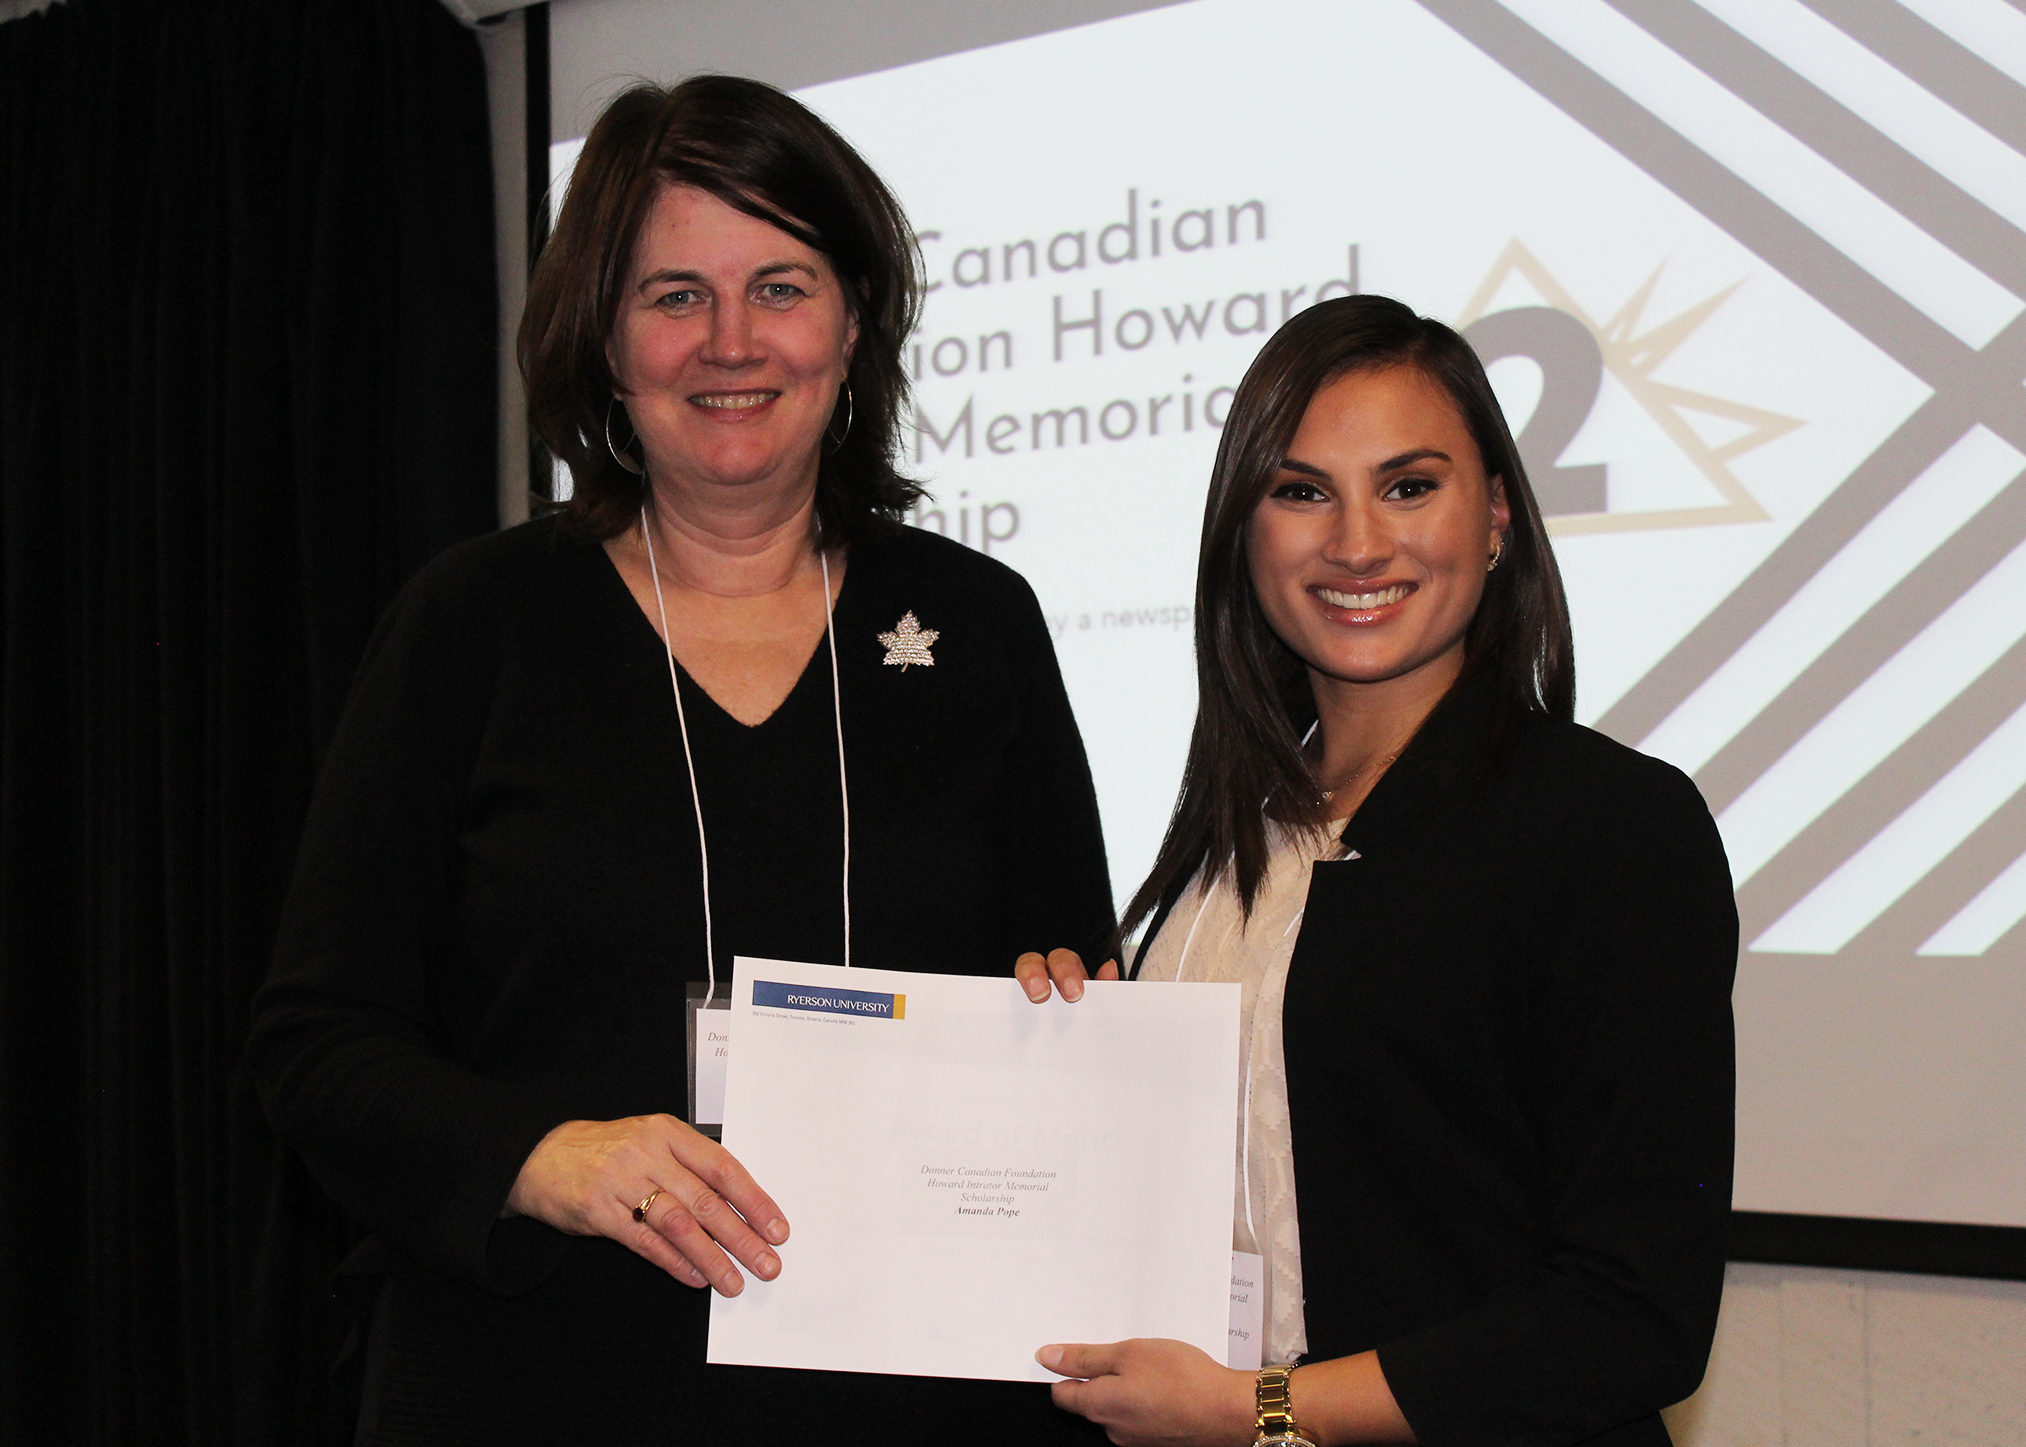 Donner Canadian Foundation Howard Intrator Memorial Scholarship presenter Helen McLean with award recipient Amanda Pope.